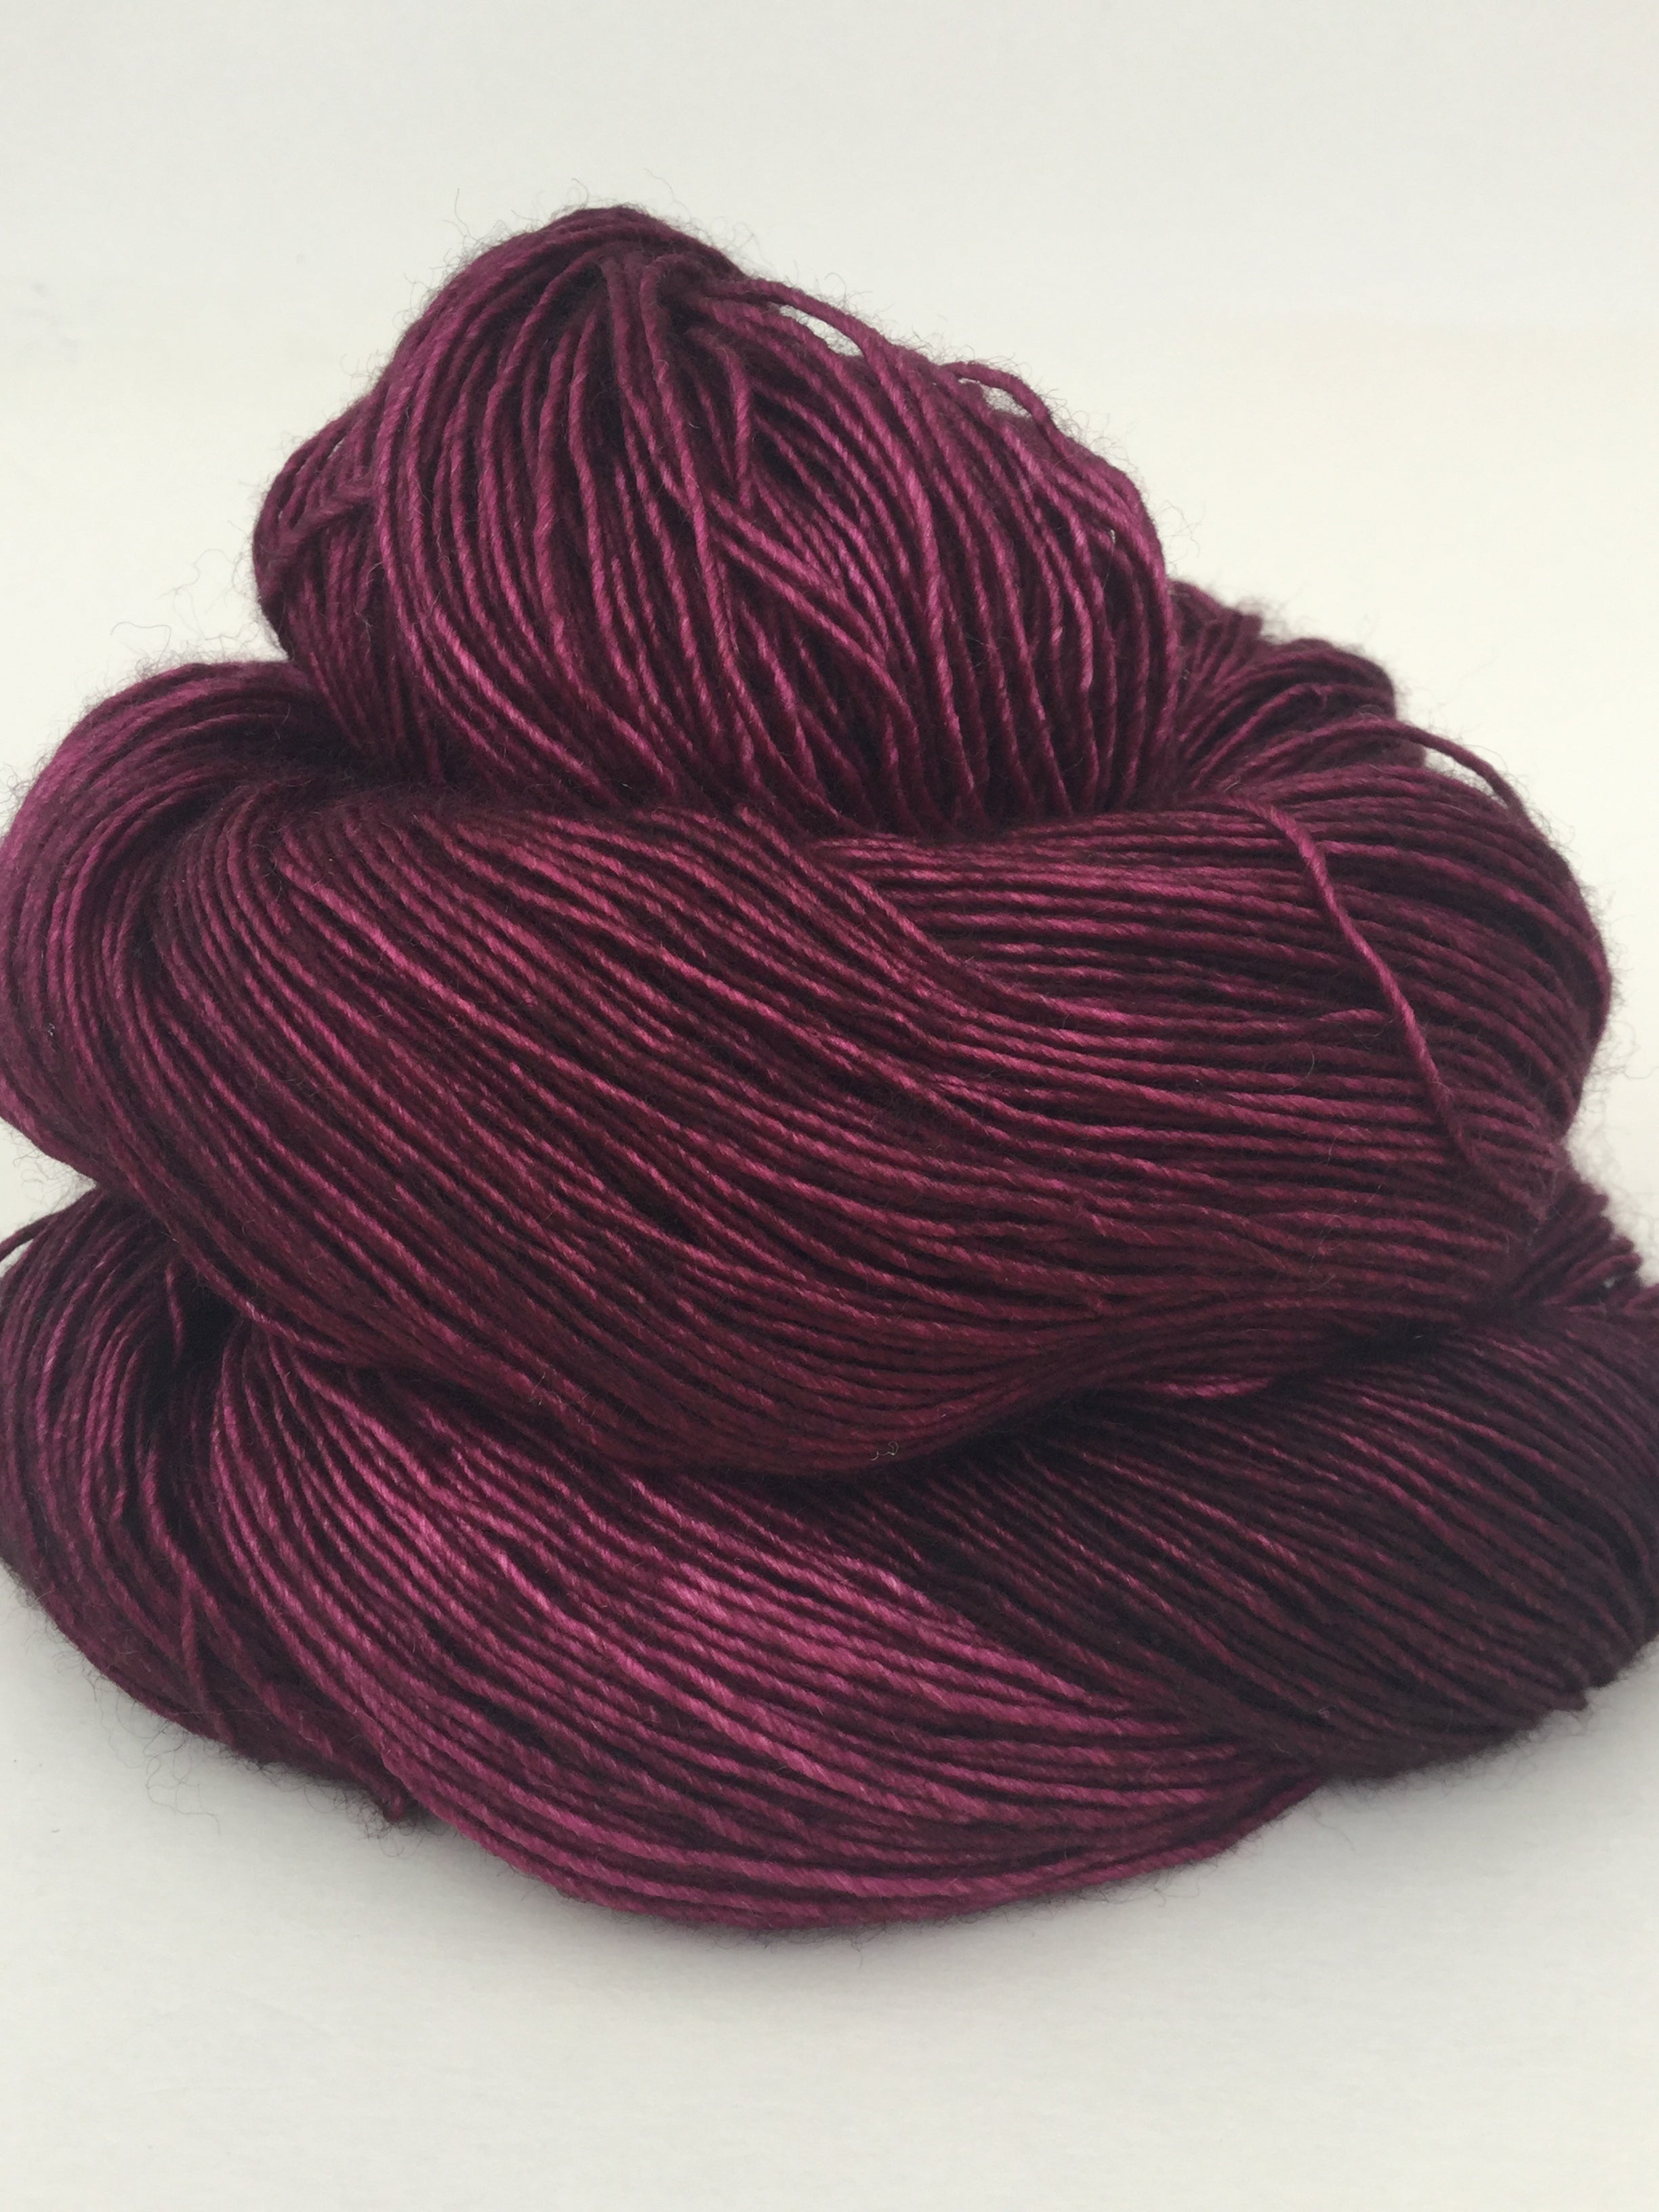 Deep Cranberry - River Silk and Merino